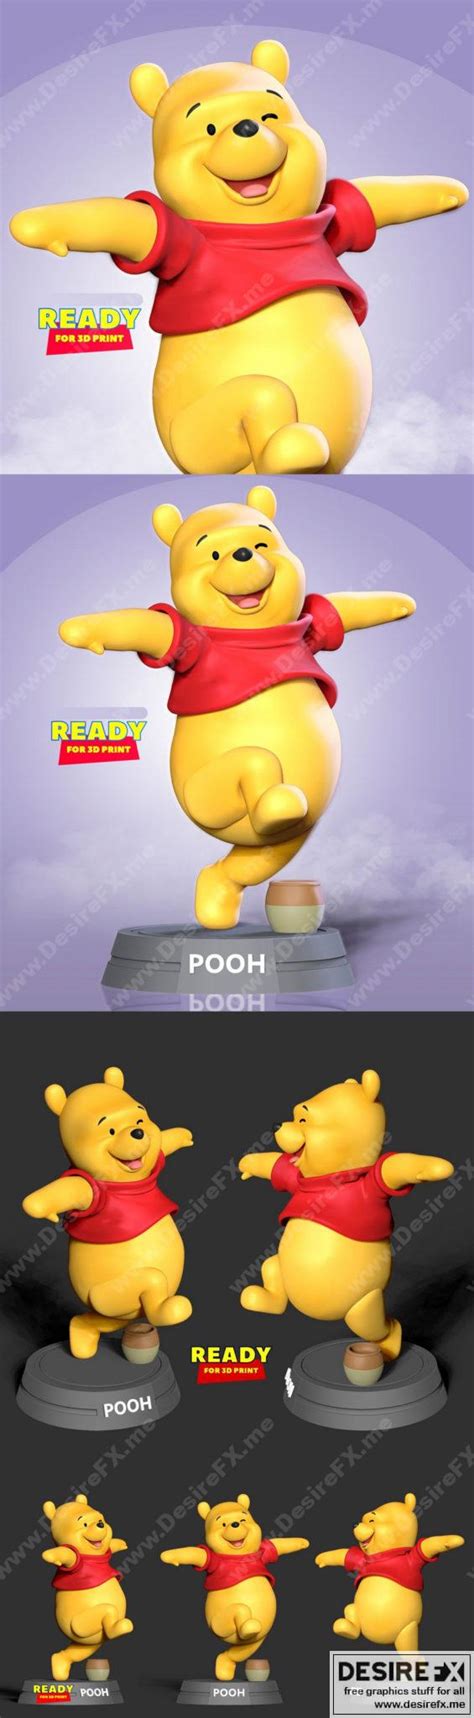 Desire Fx 3d Models Winnie The Pooh